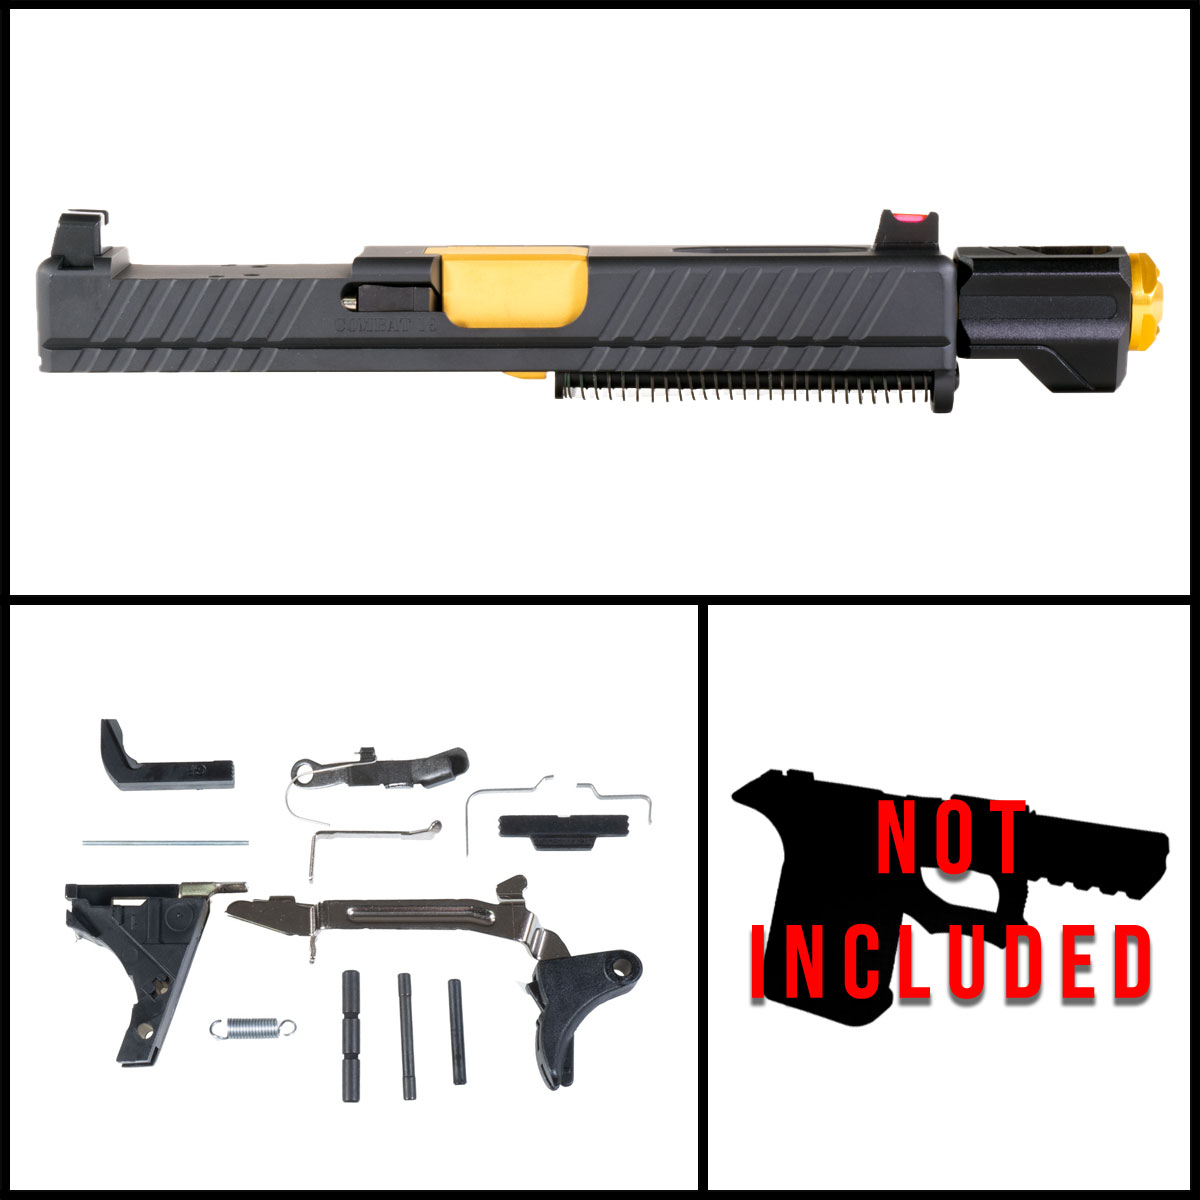 DDS 'Bbang w/ Tyrant Designs Compensator' 9mm Full Pistol Build Kit (Everything Minus Frame) - Glock 19 Gen 1-3 Compatible